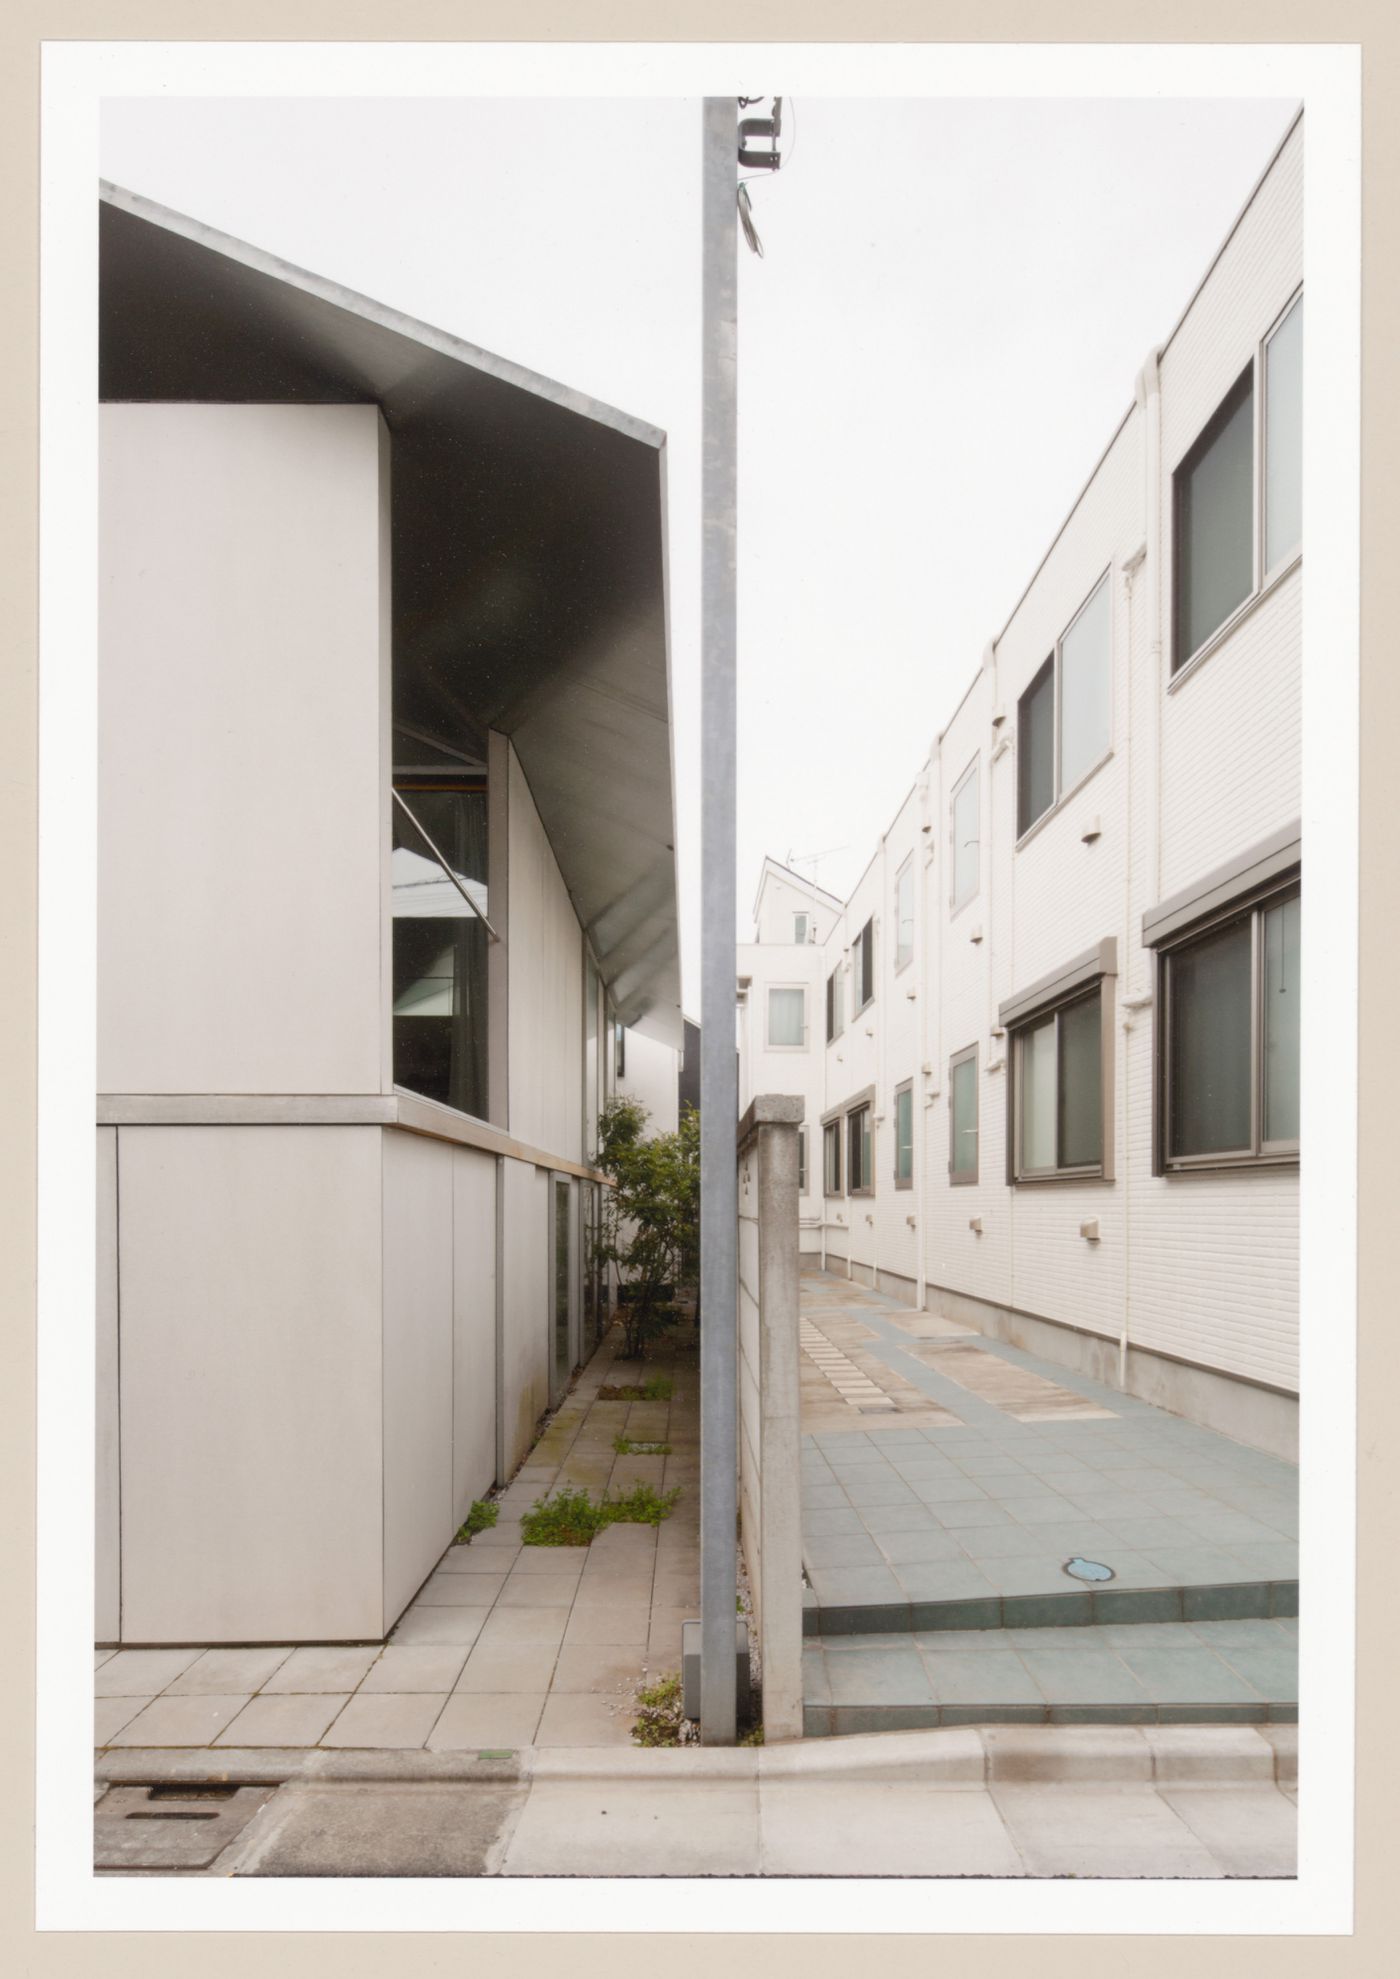 House in Kyodo (Go Hasegawa & Associates, 2010-2011), Tokyo, Japan